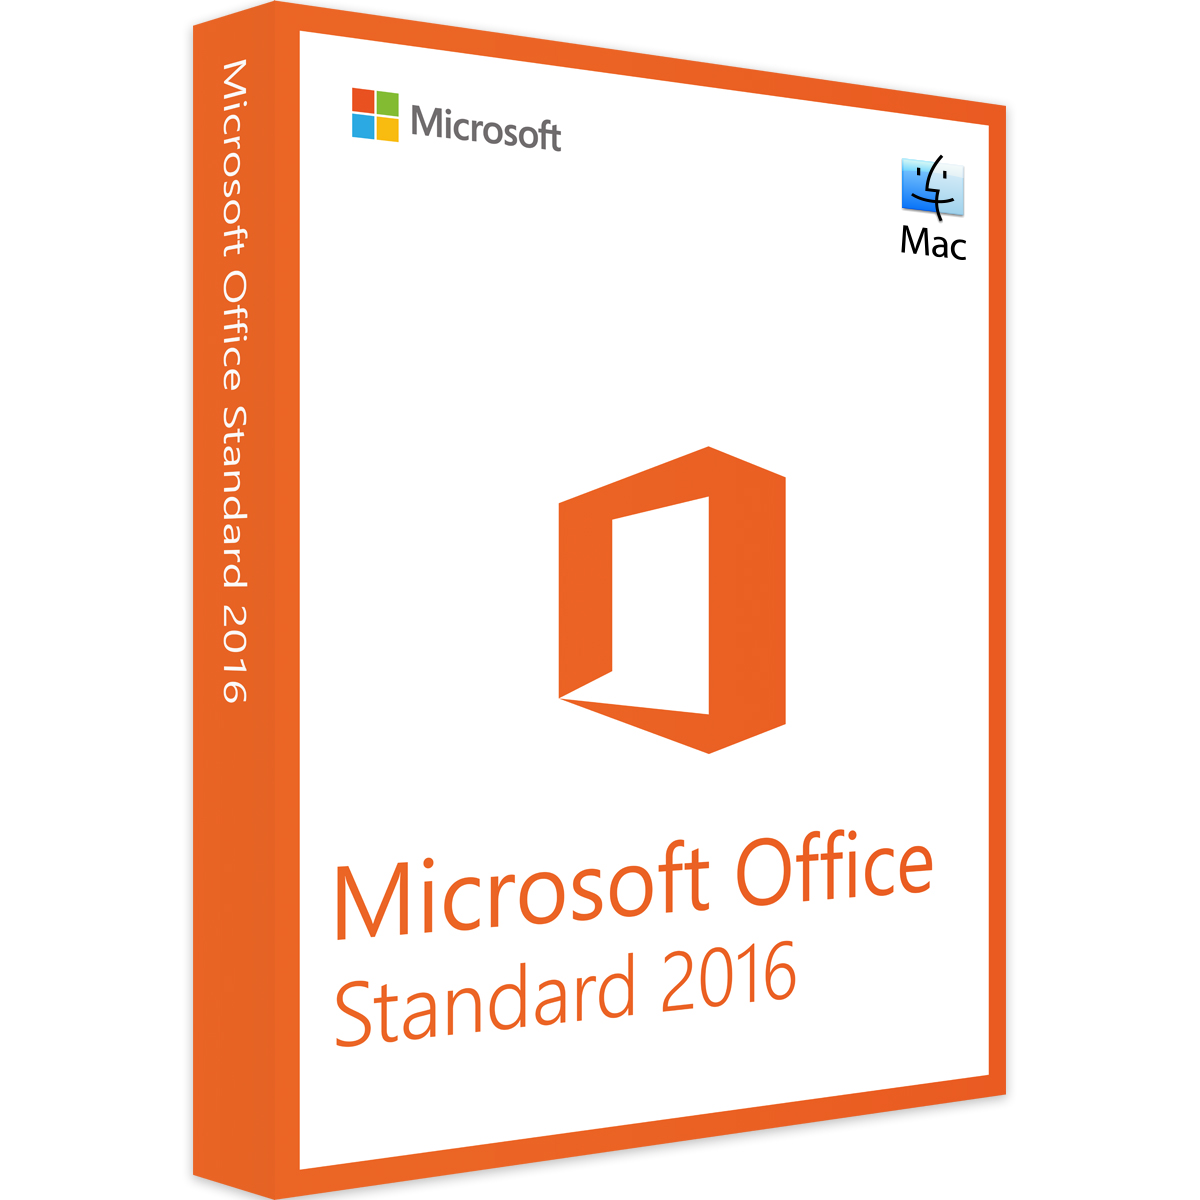 Microsoft Office 2016 for Mac 16.14 Full Cracked